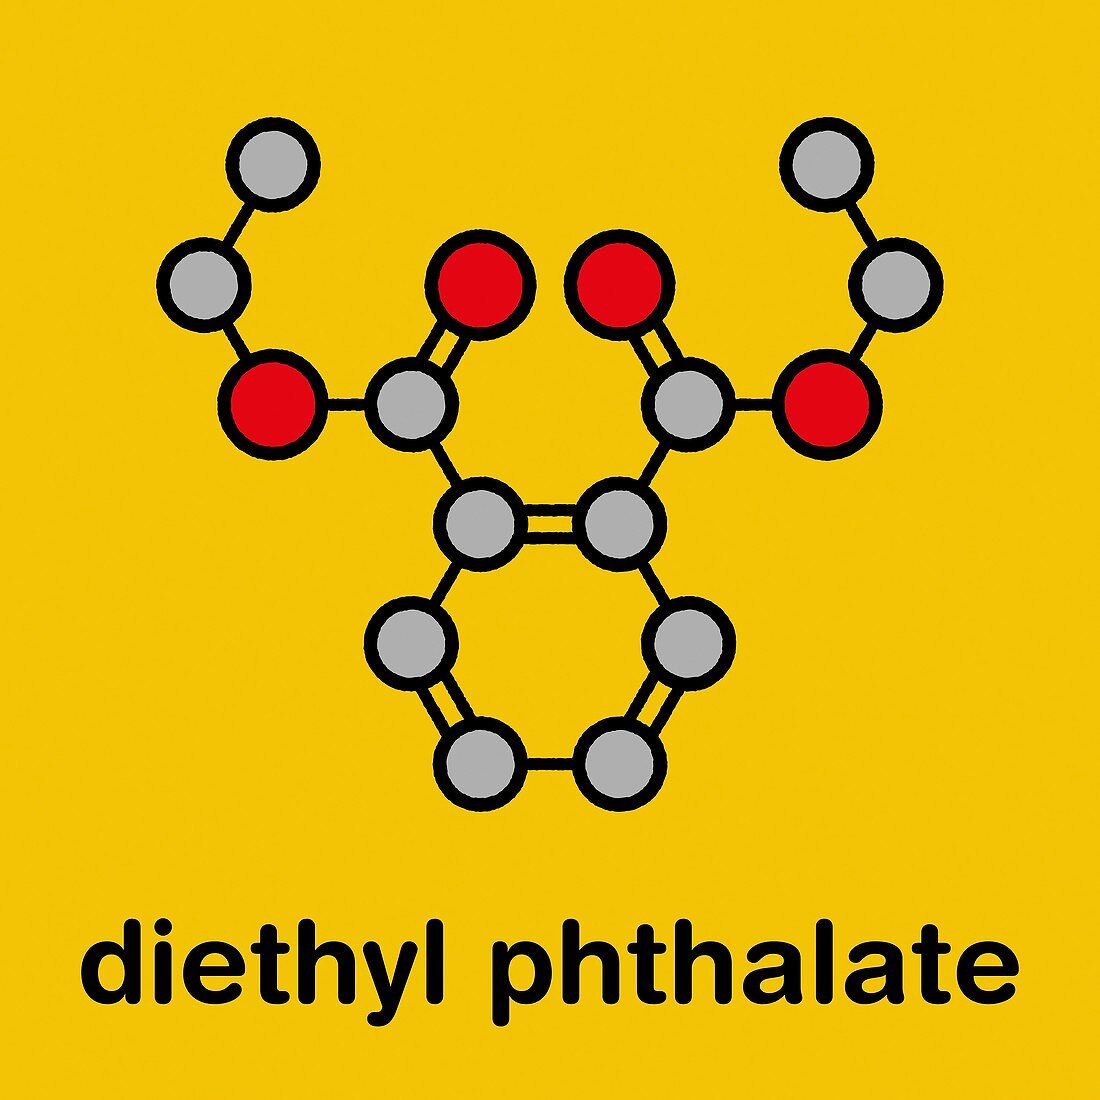 Diethyl phthalate plasticizer molecule, illustration